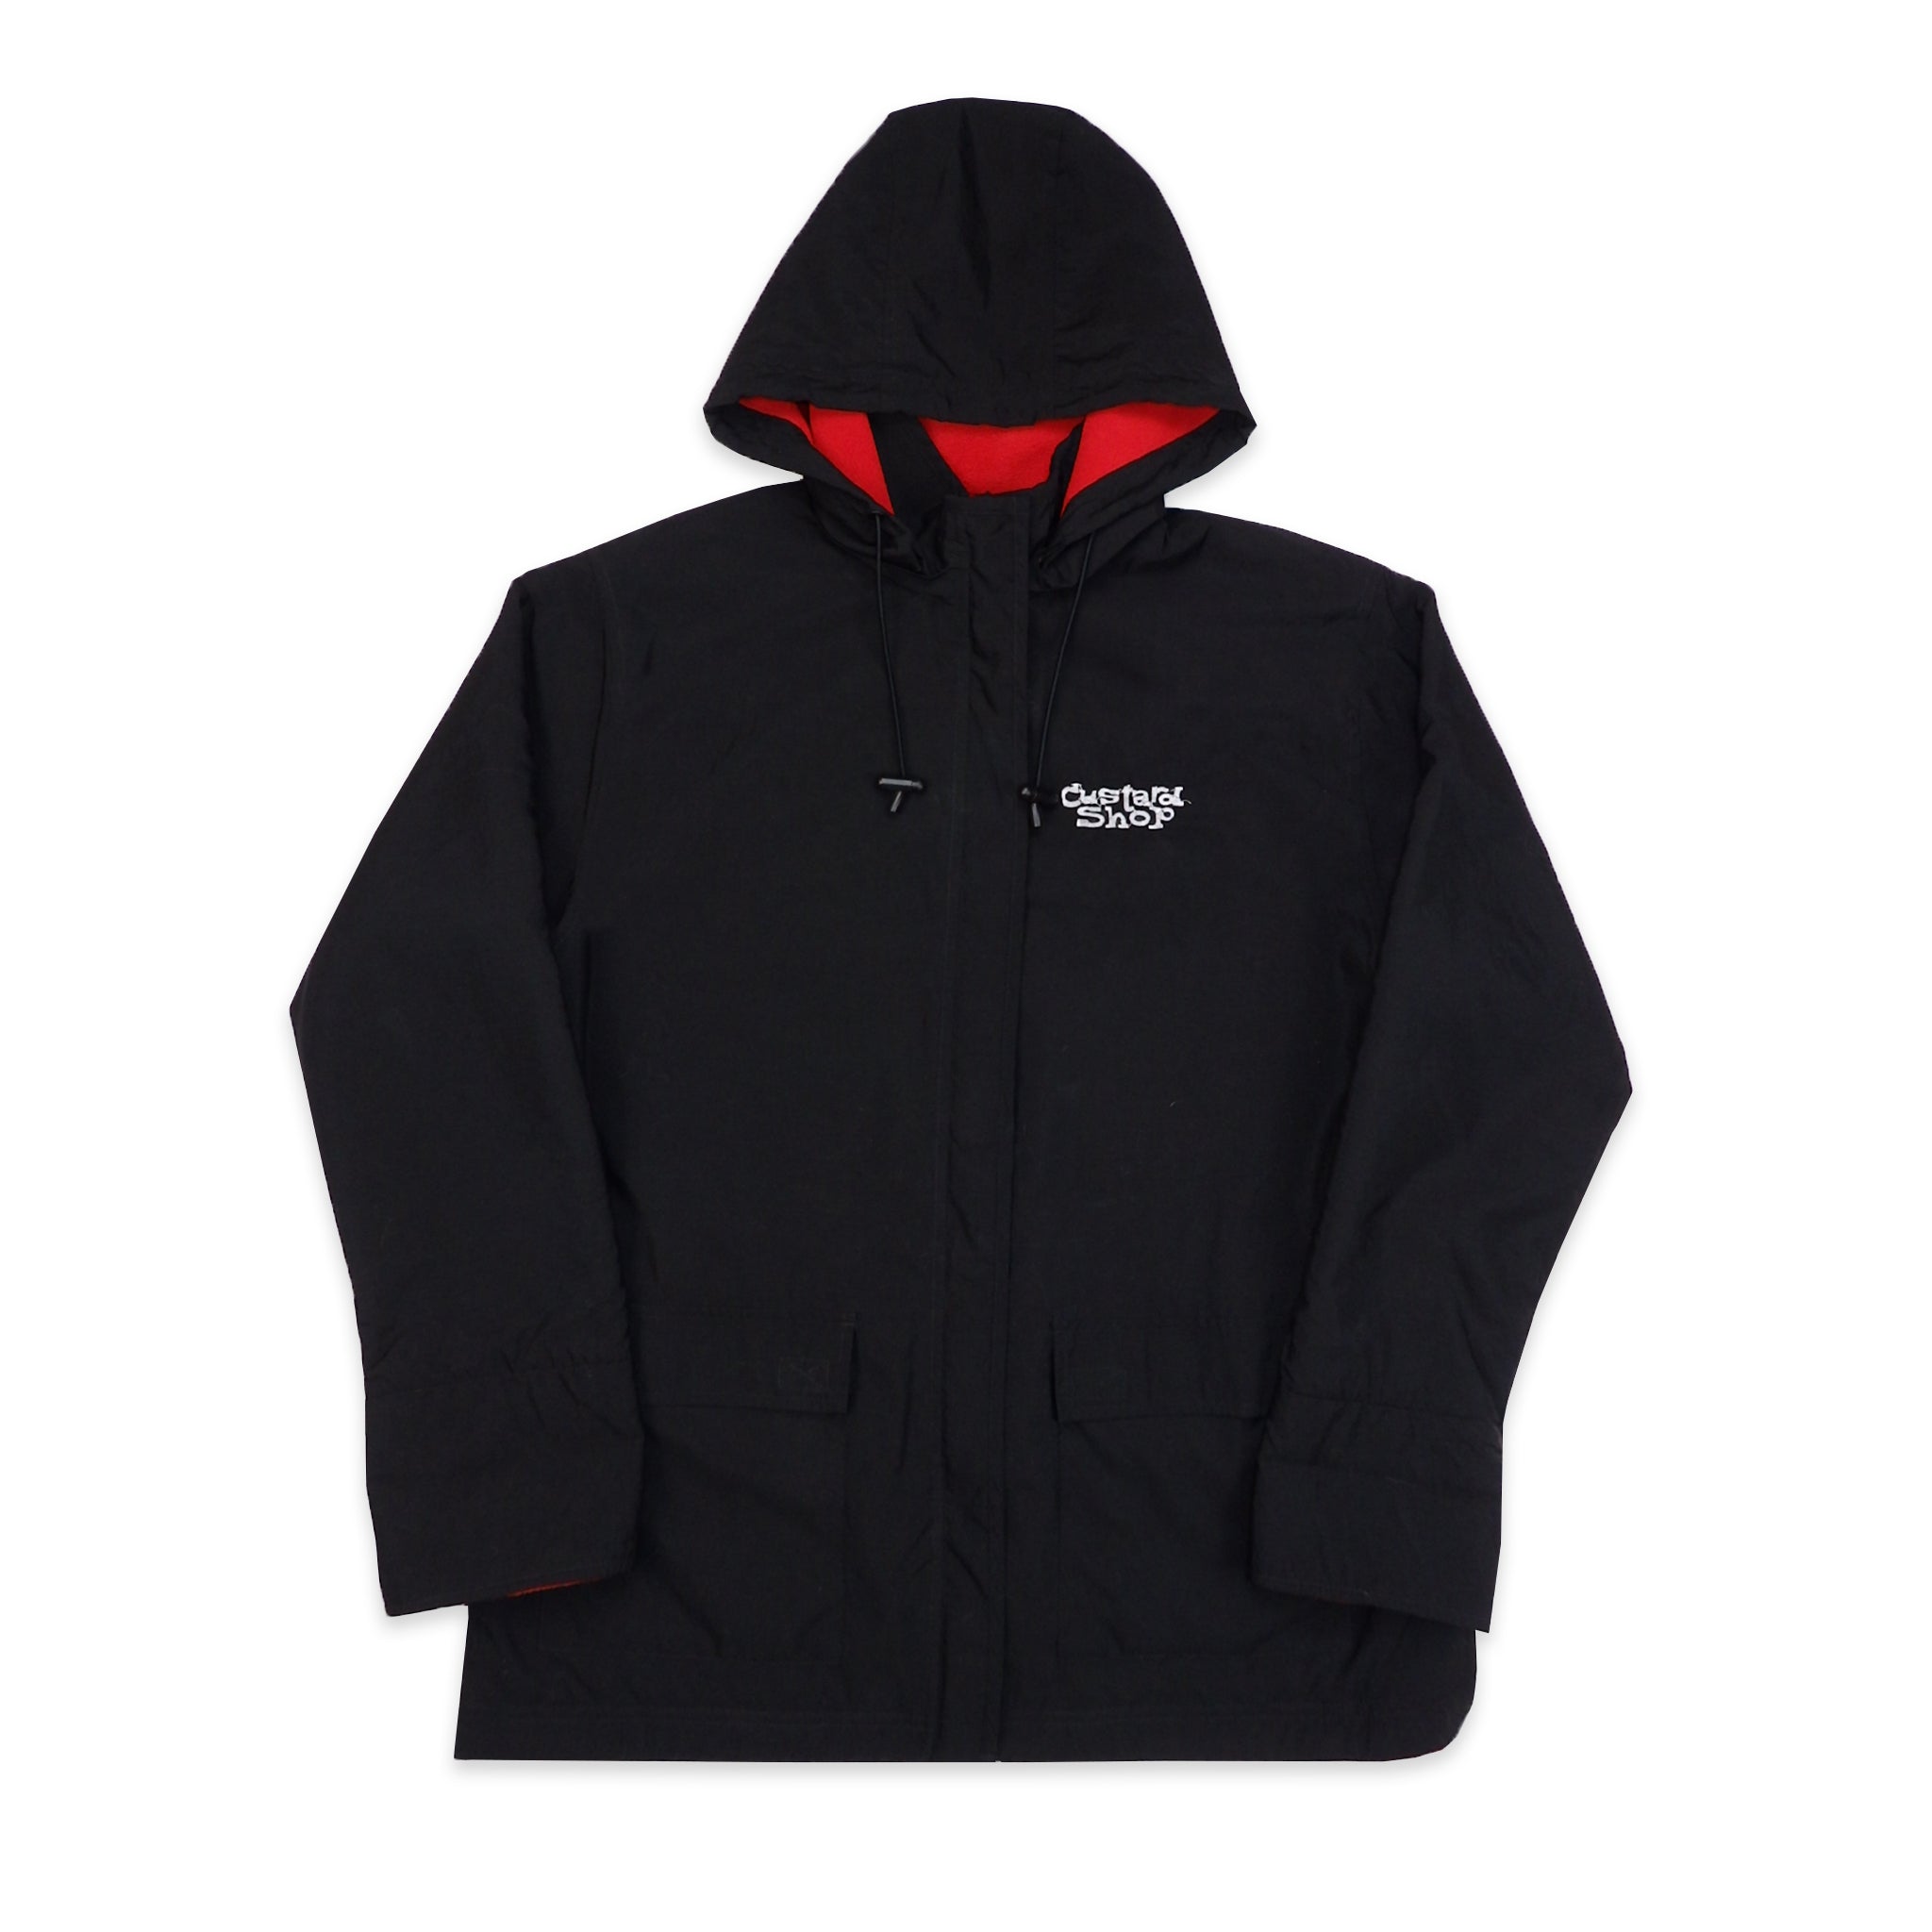 Custard Shop Black Fleece Lined Jacket | Size Large